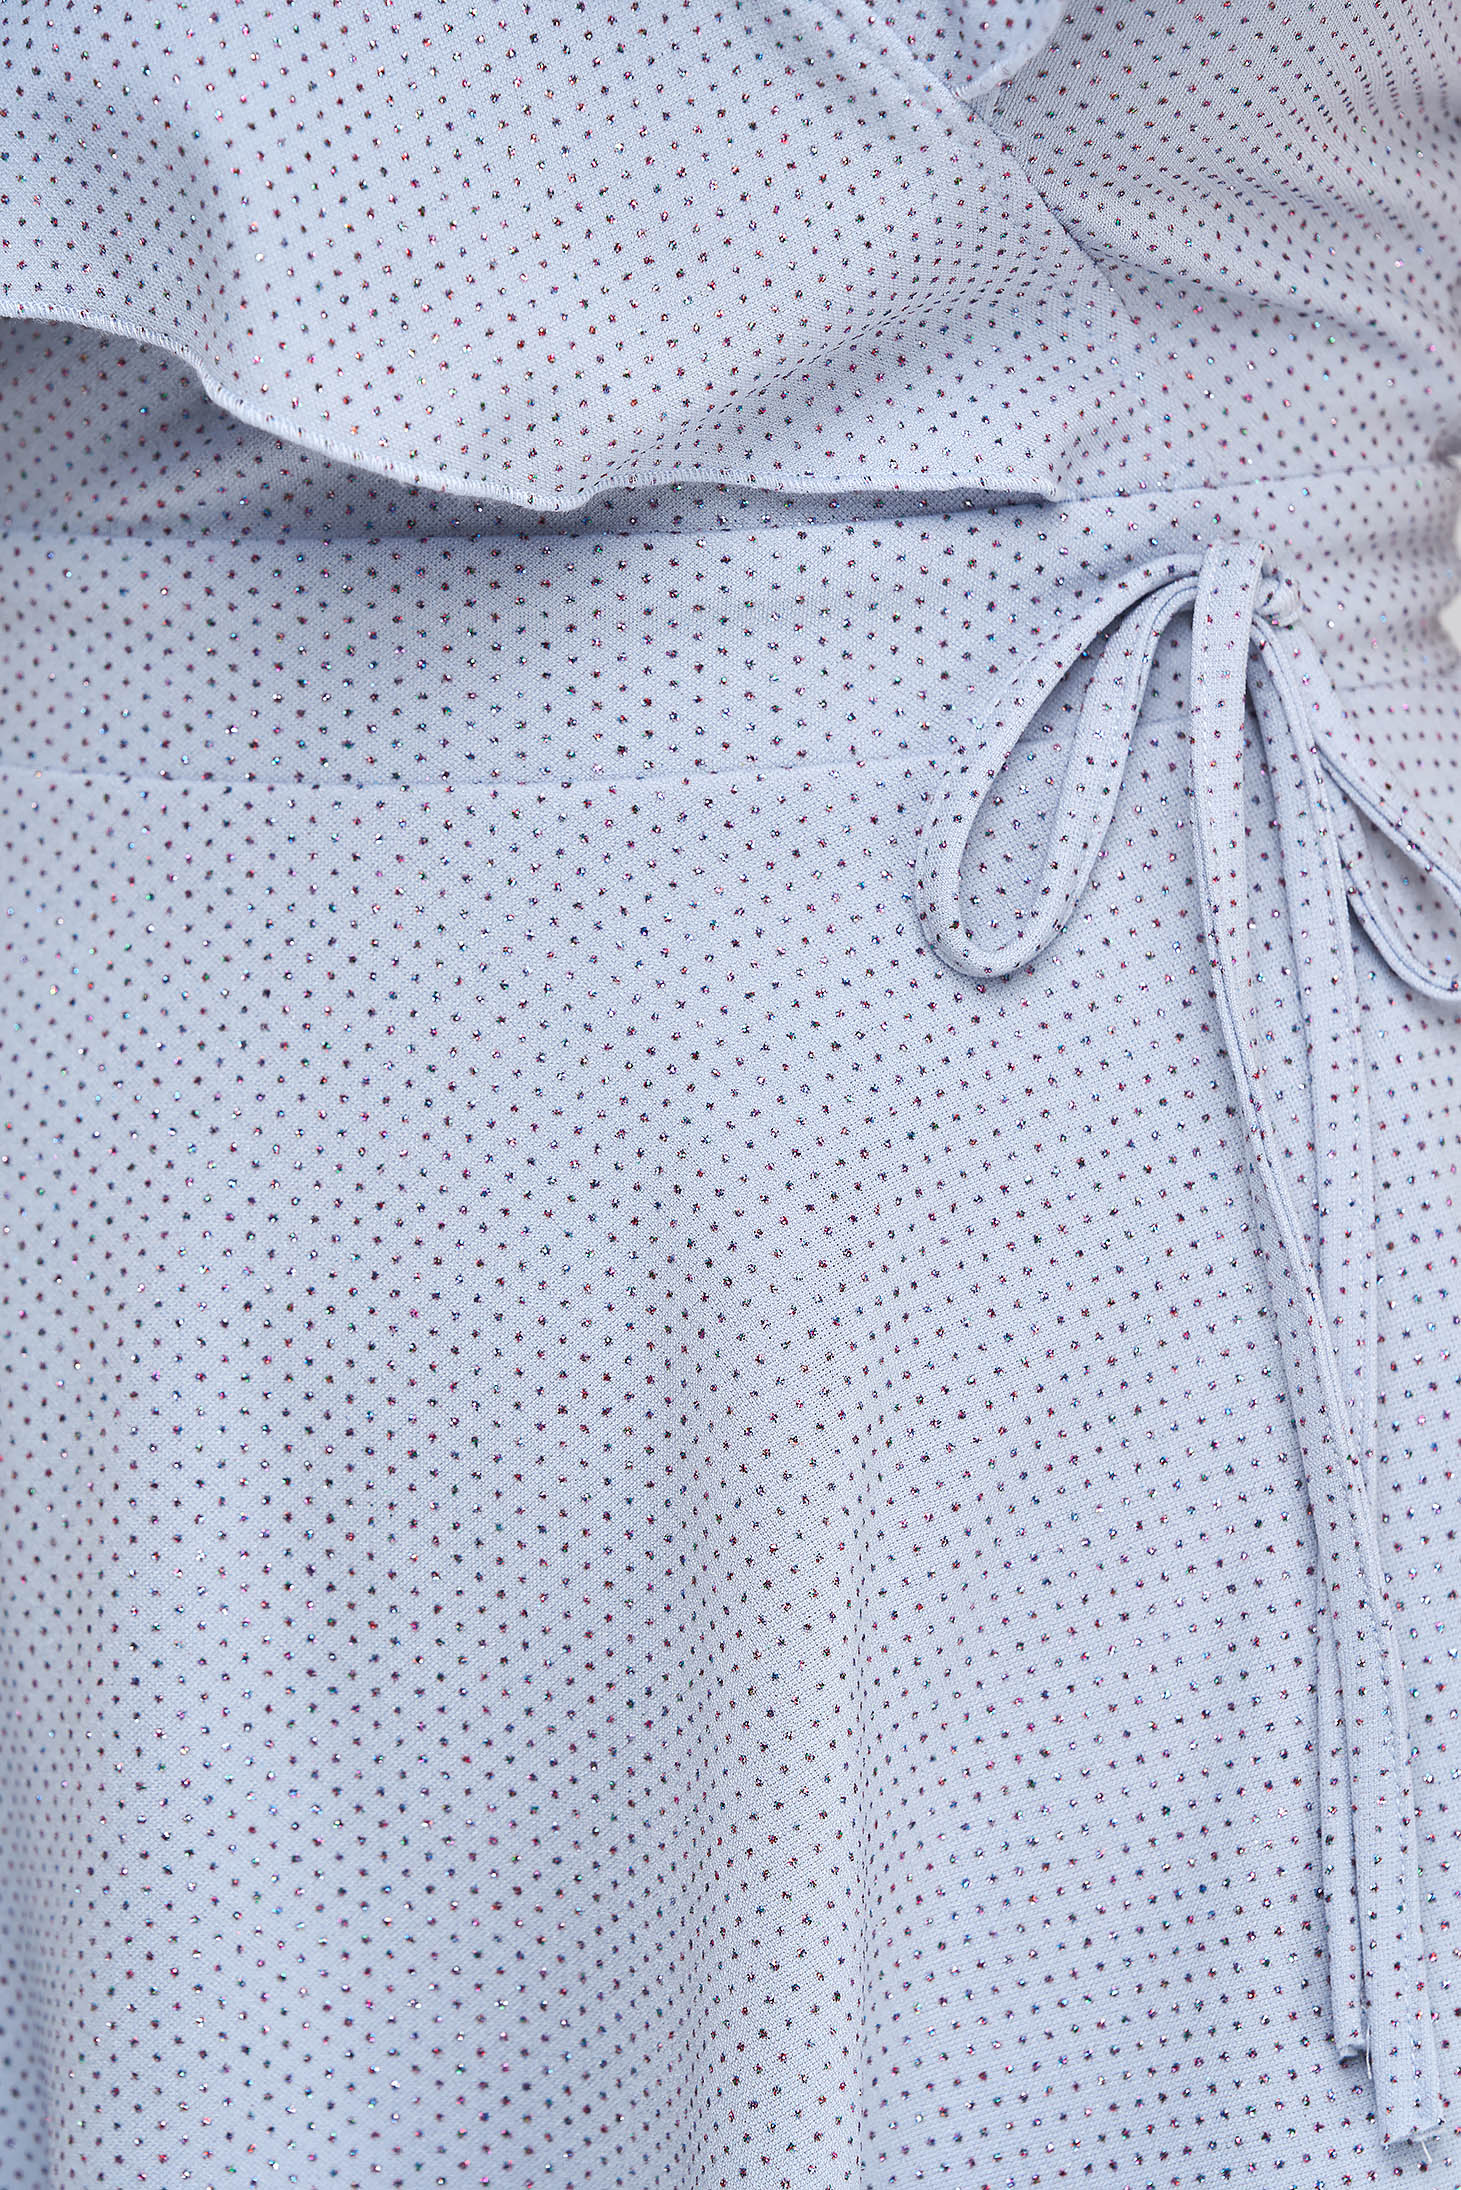 Rochie din crep albastru-deschis pana la genunchi in clos cu aplicatii cu sclipici - StarShinerS 5 - StarShinerS.ro